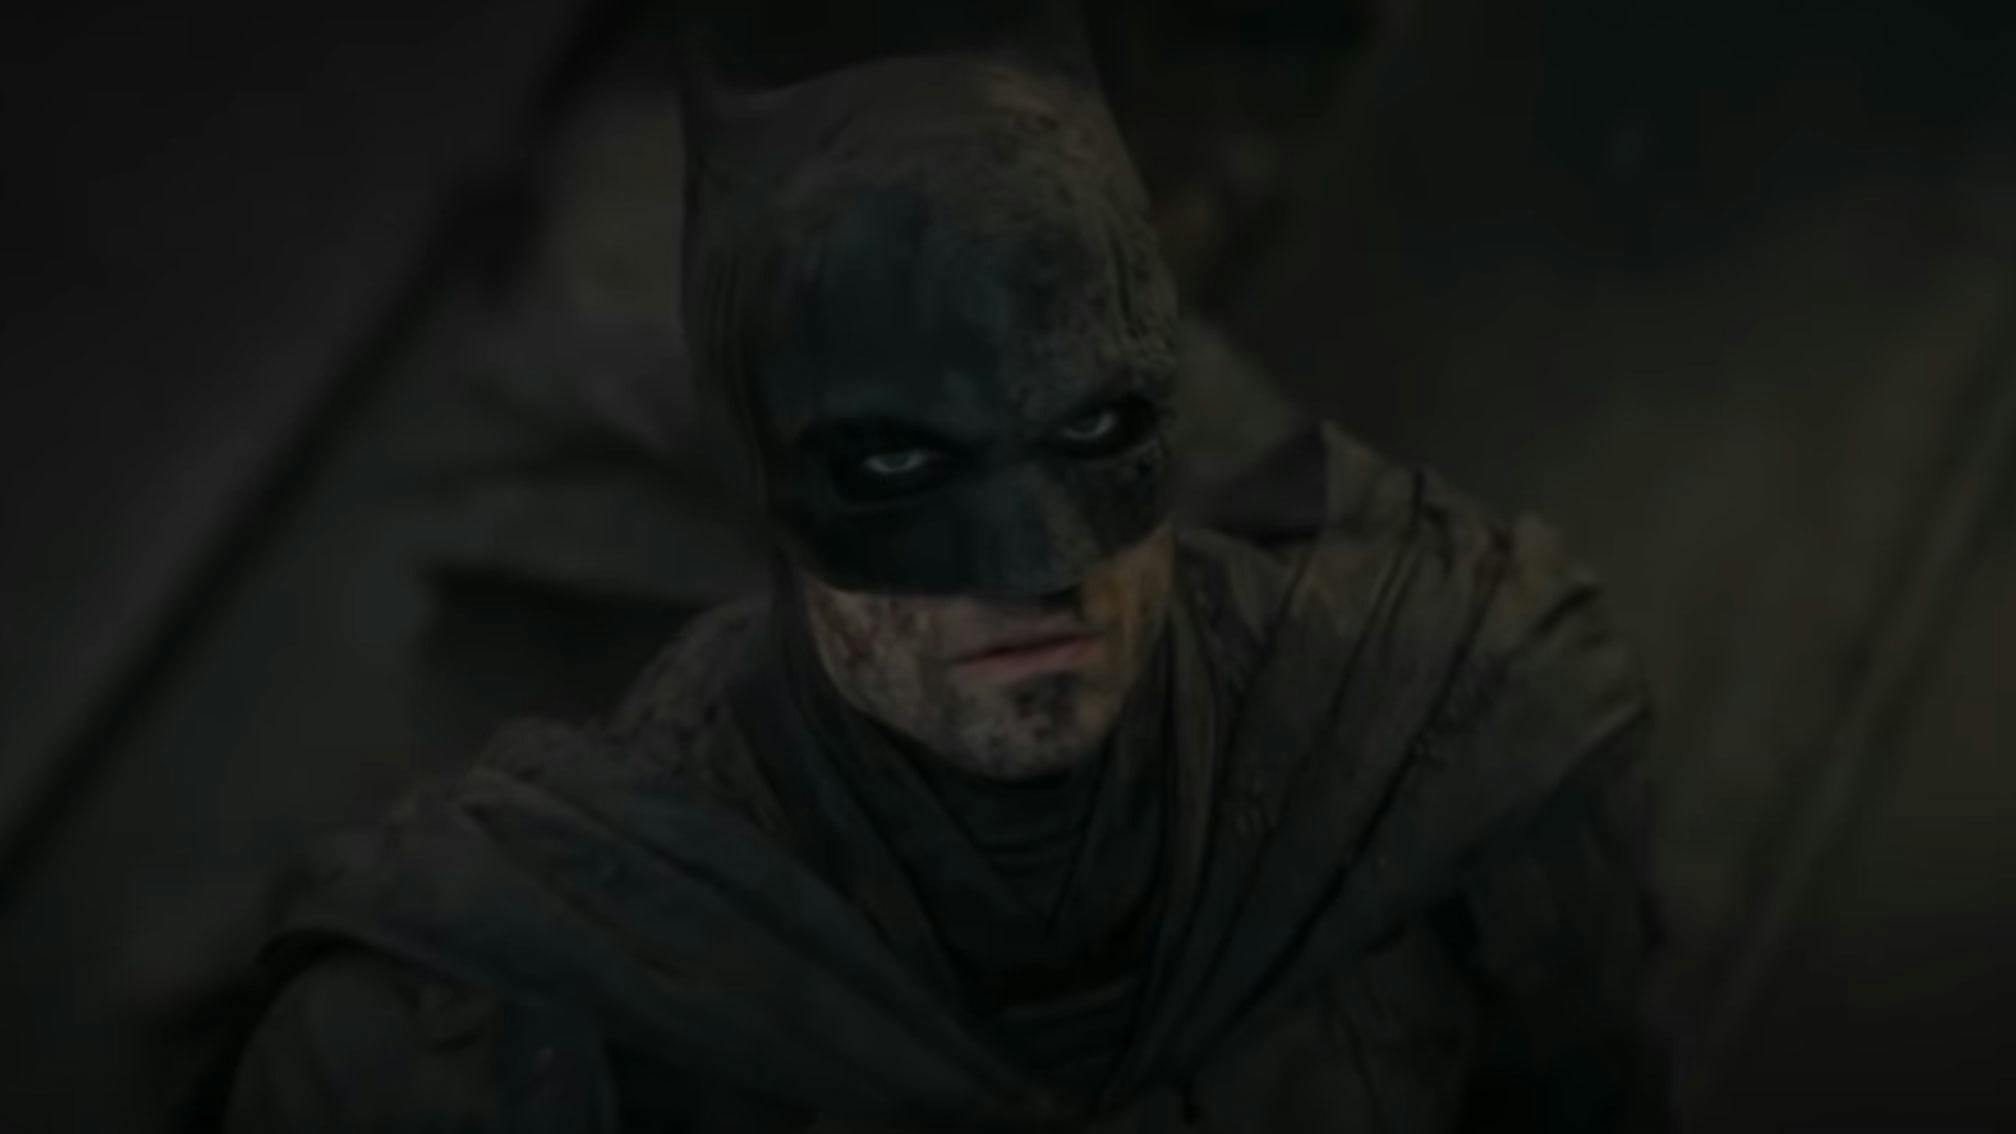 Watch the dark, intense new trailer for The Batman featuring Robert Pattinson